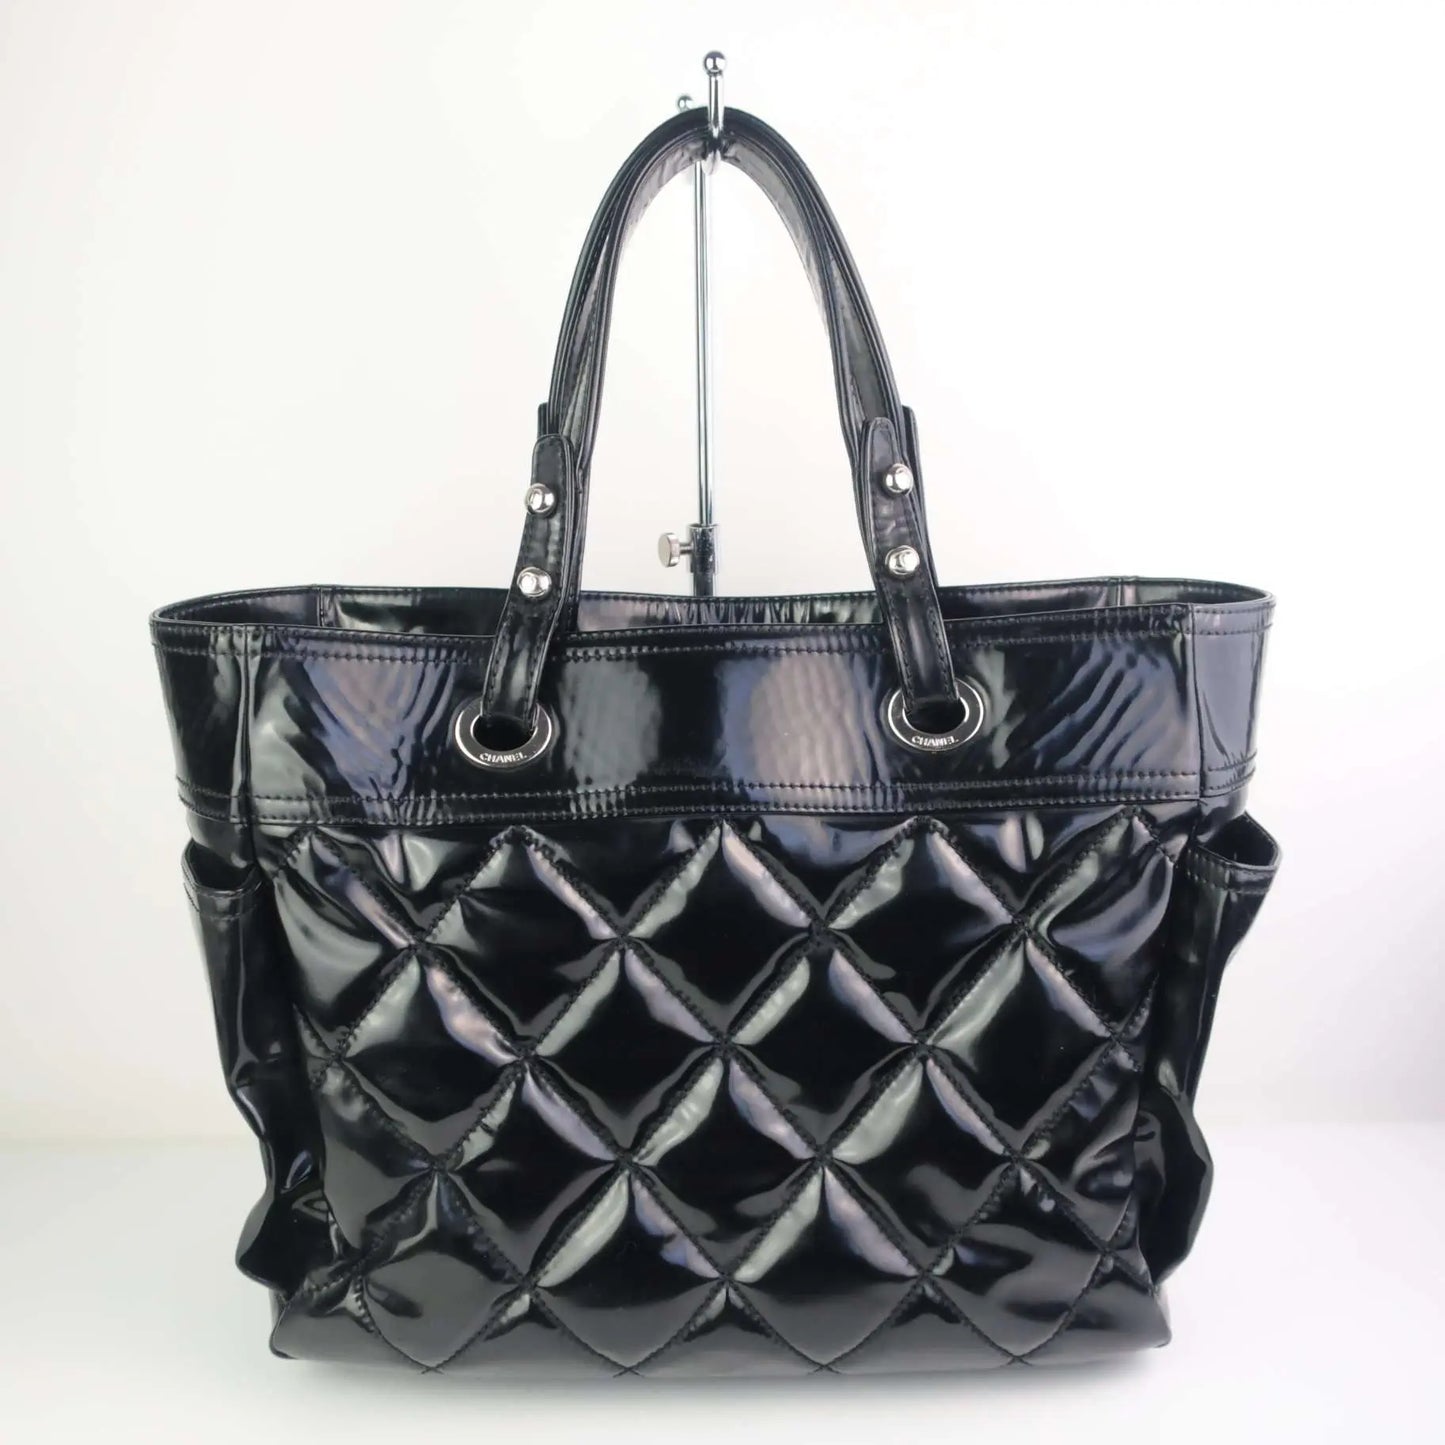 Chanel Chanel Black Patent Leather Biarritz Tote Bag LVBagaholic